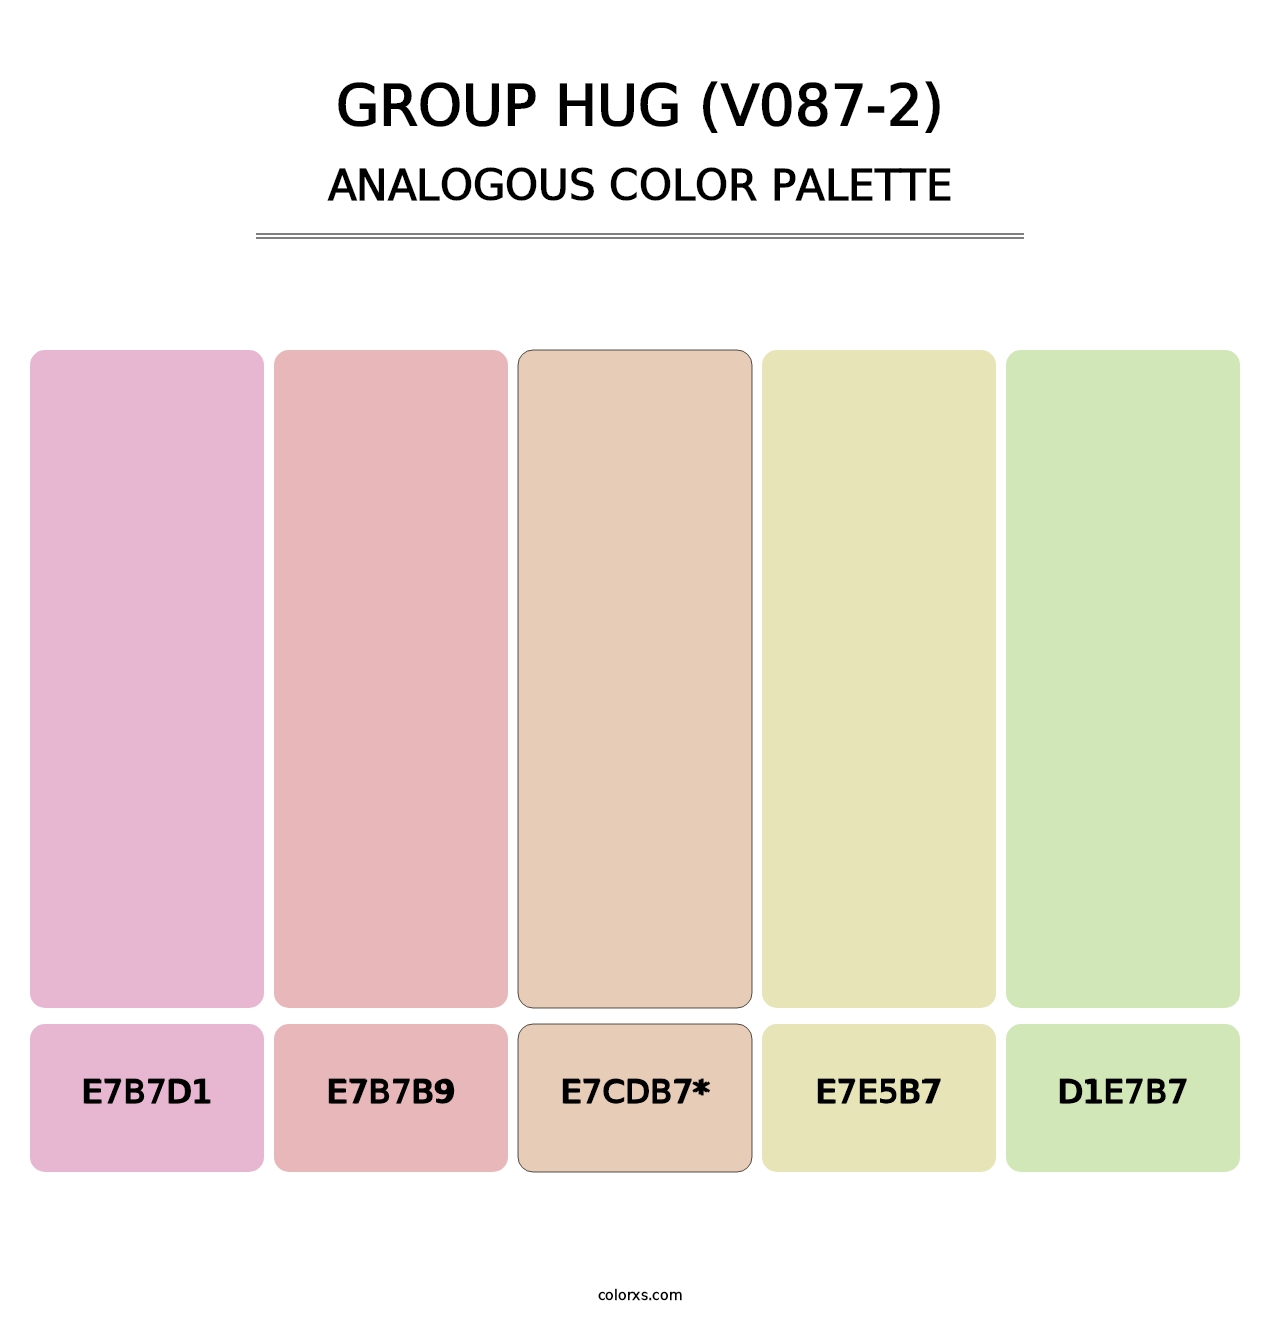 Group Hug (V087-2) - Analogous Color Palette